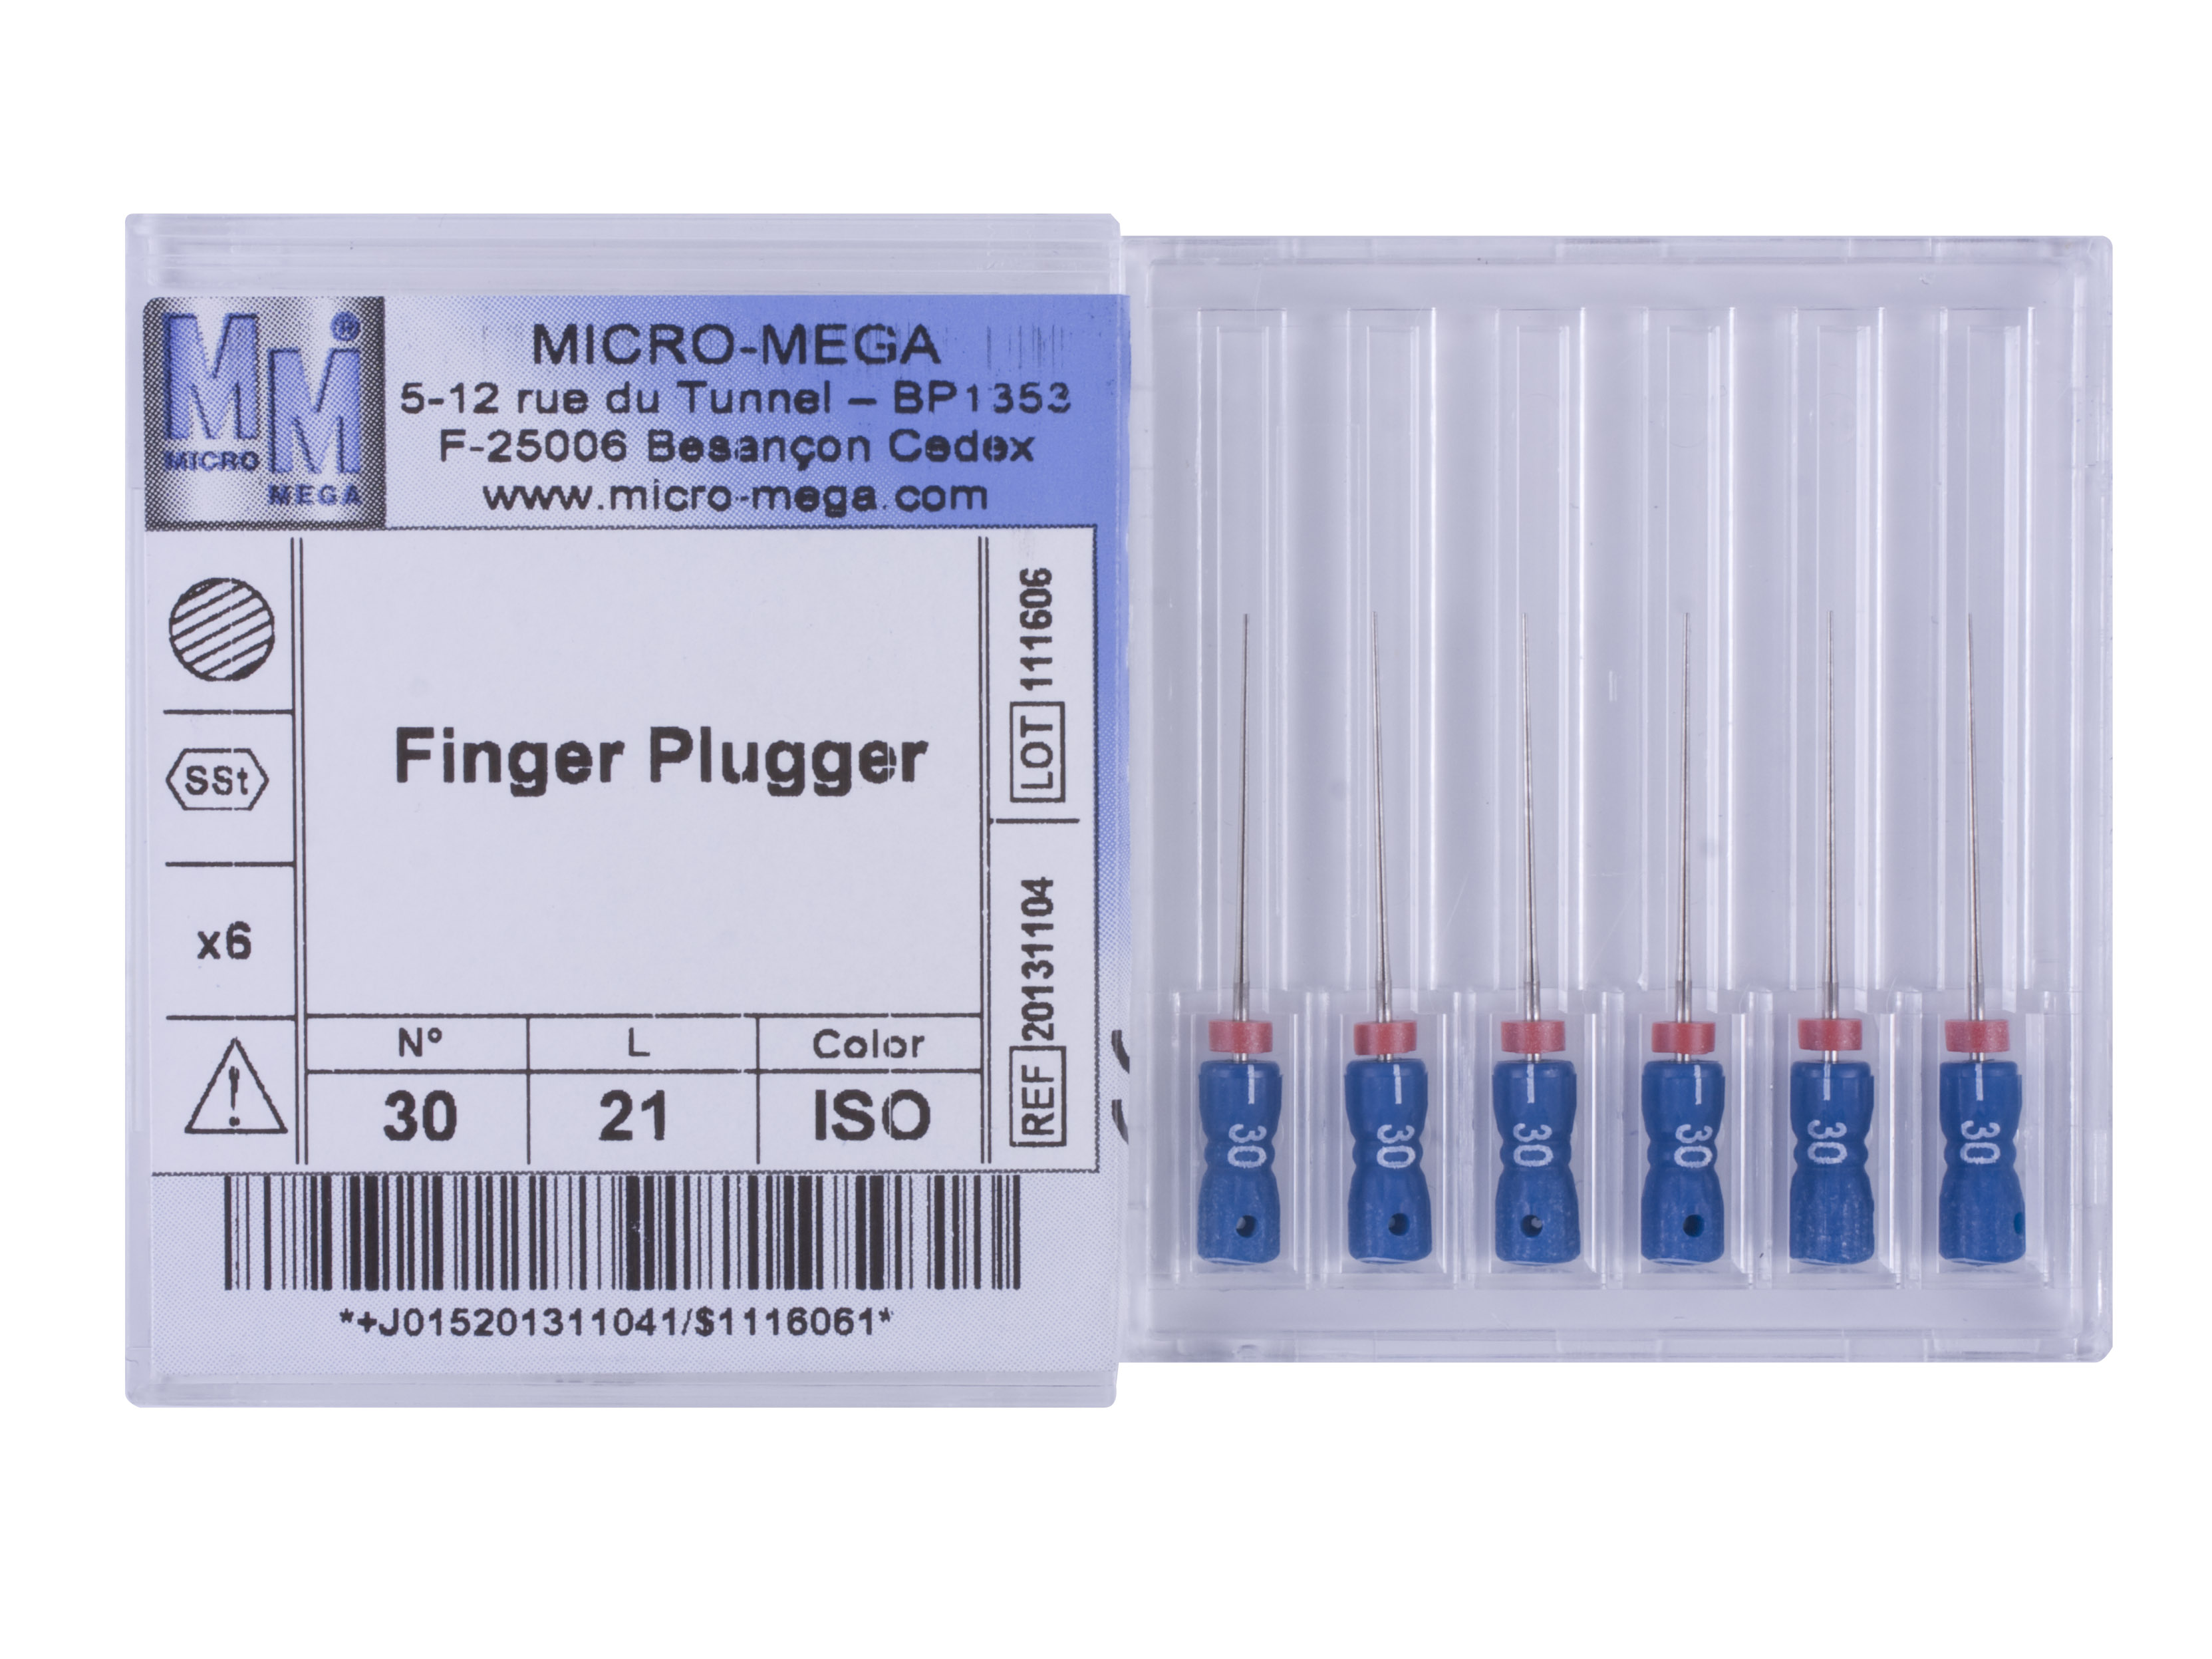 Finger Plugger n30 L21 2% (steel) - инструменты эндодонтические